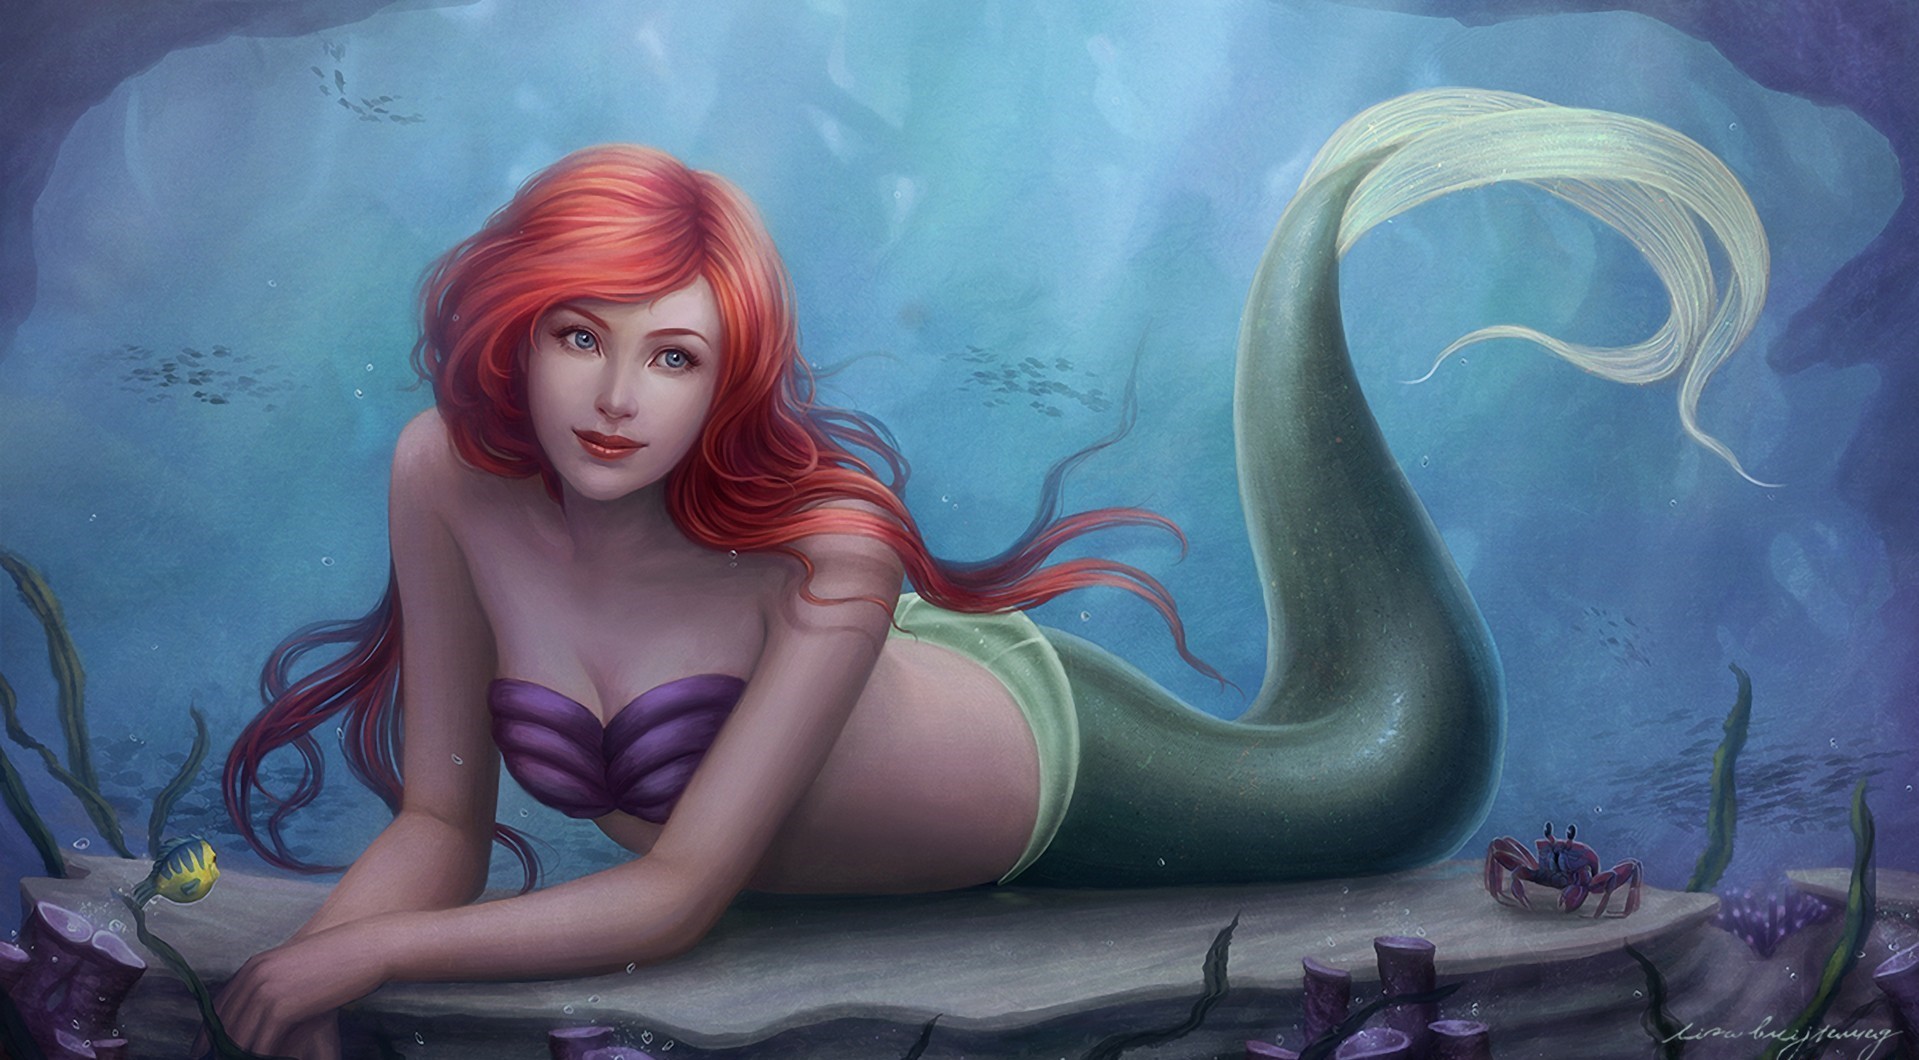 General 1919x1060 fantasy art soft shading The Little Mermaid women mermaids redhead long hair red lipstick underwater